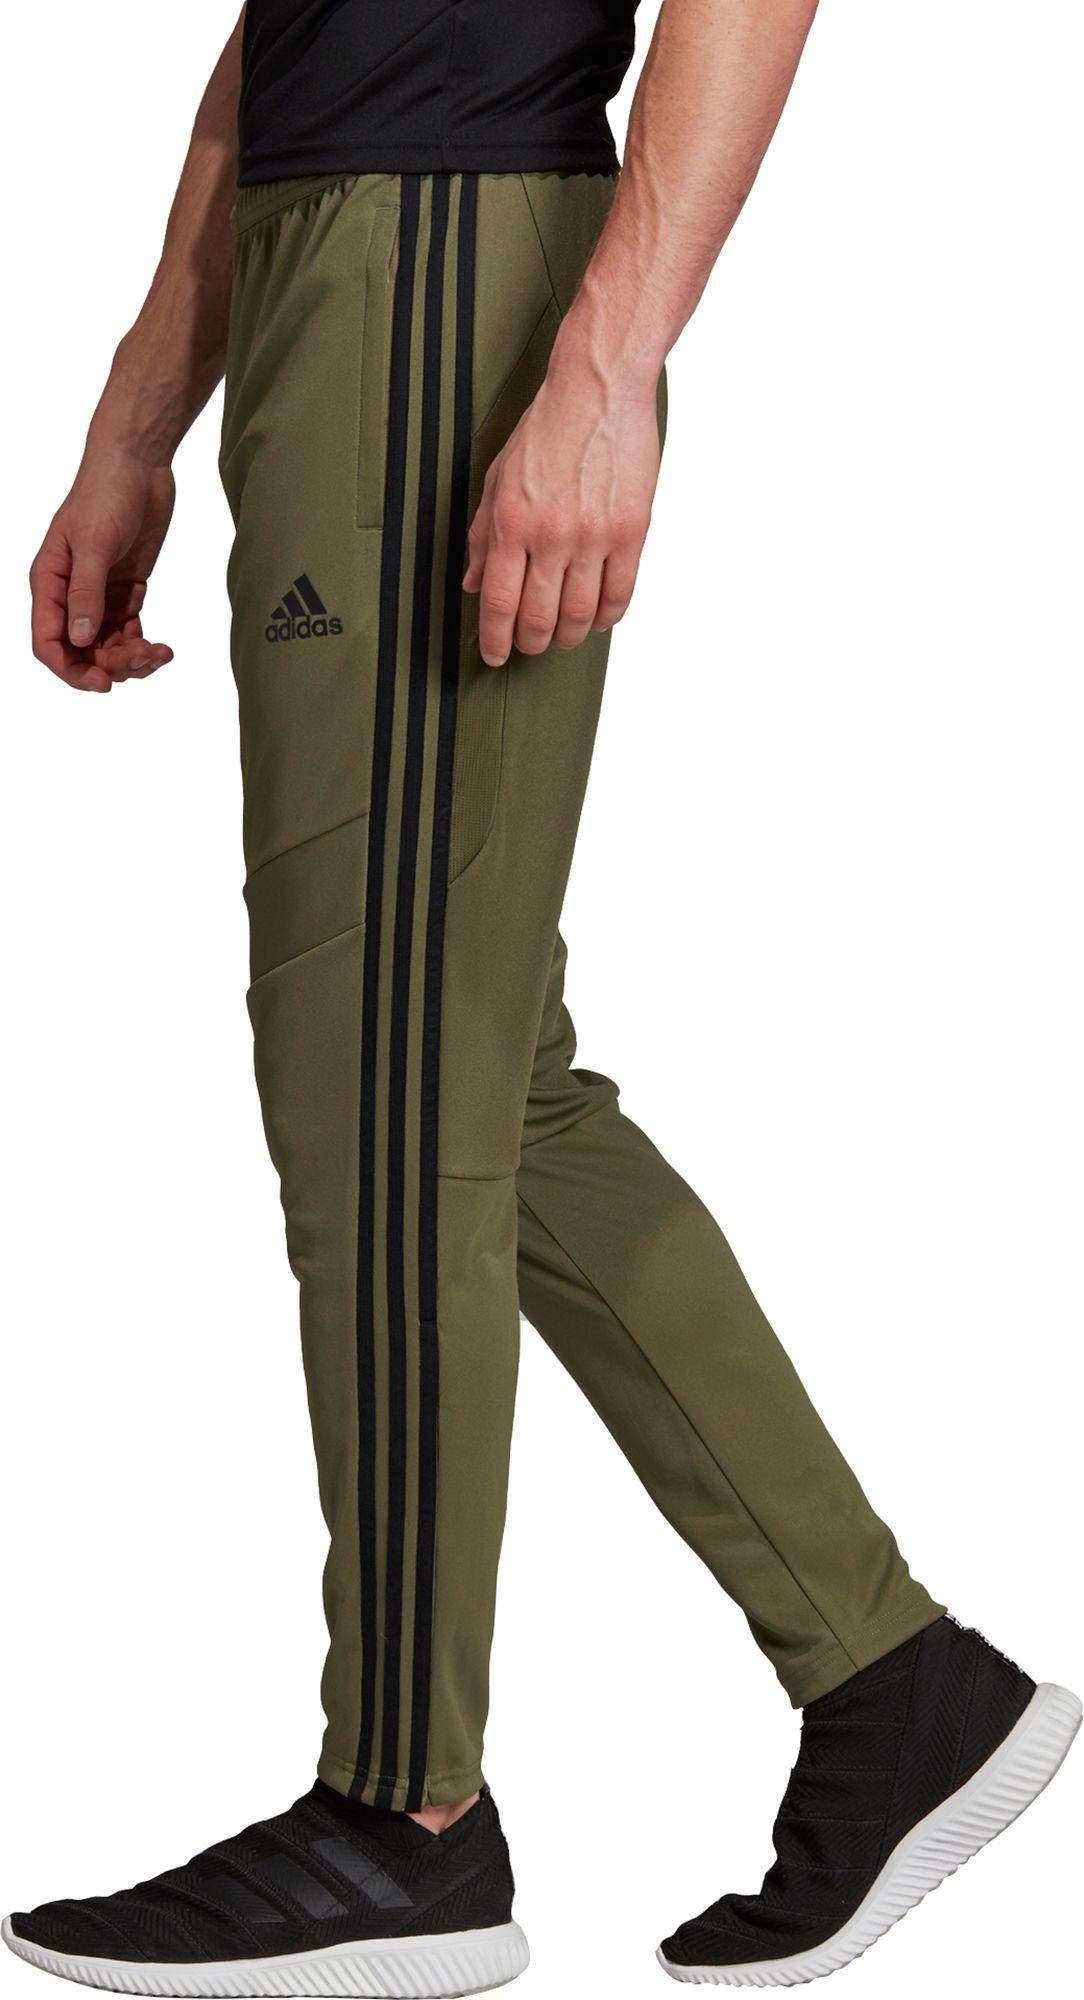 adidas Tiro 19 Training Pants in Green for Men - Lyst